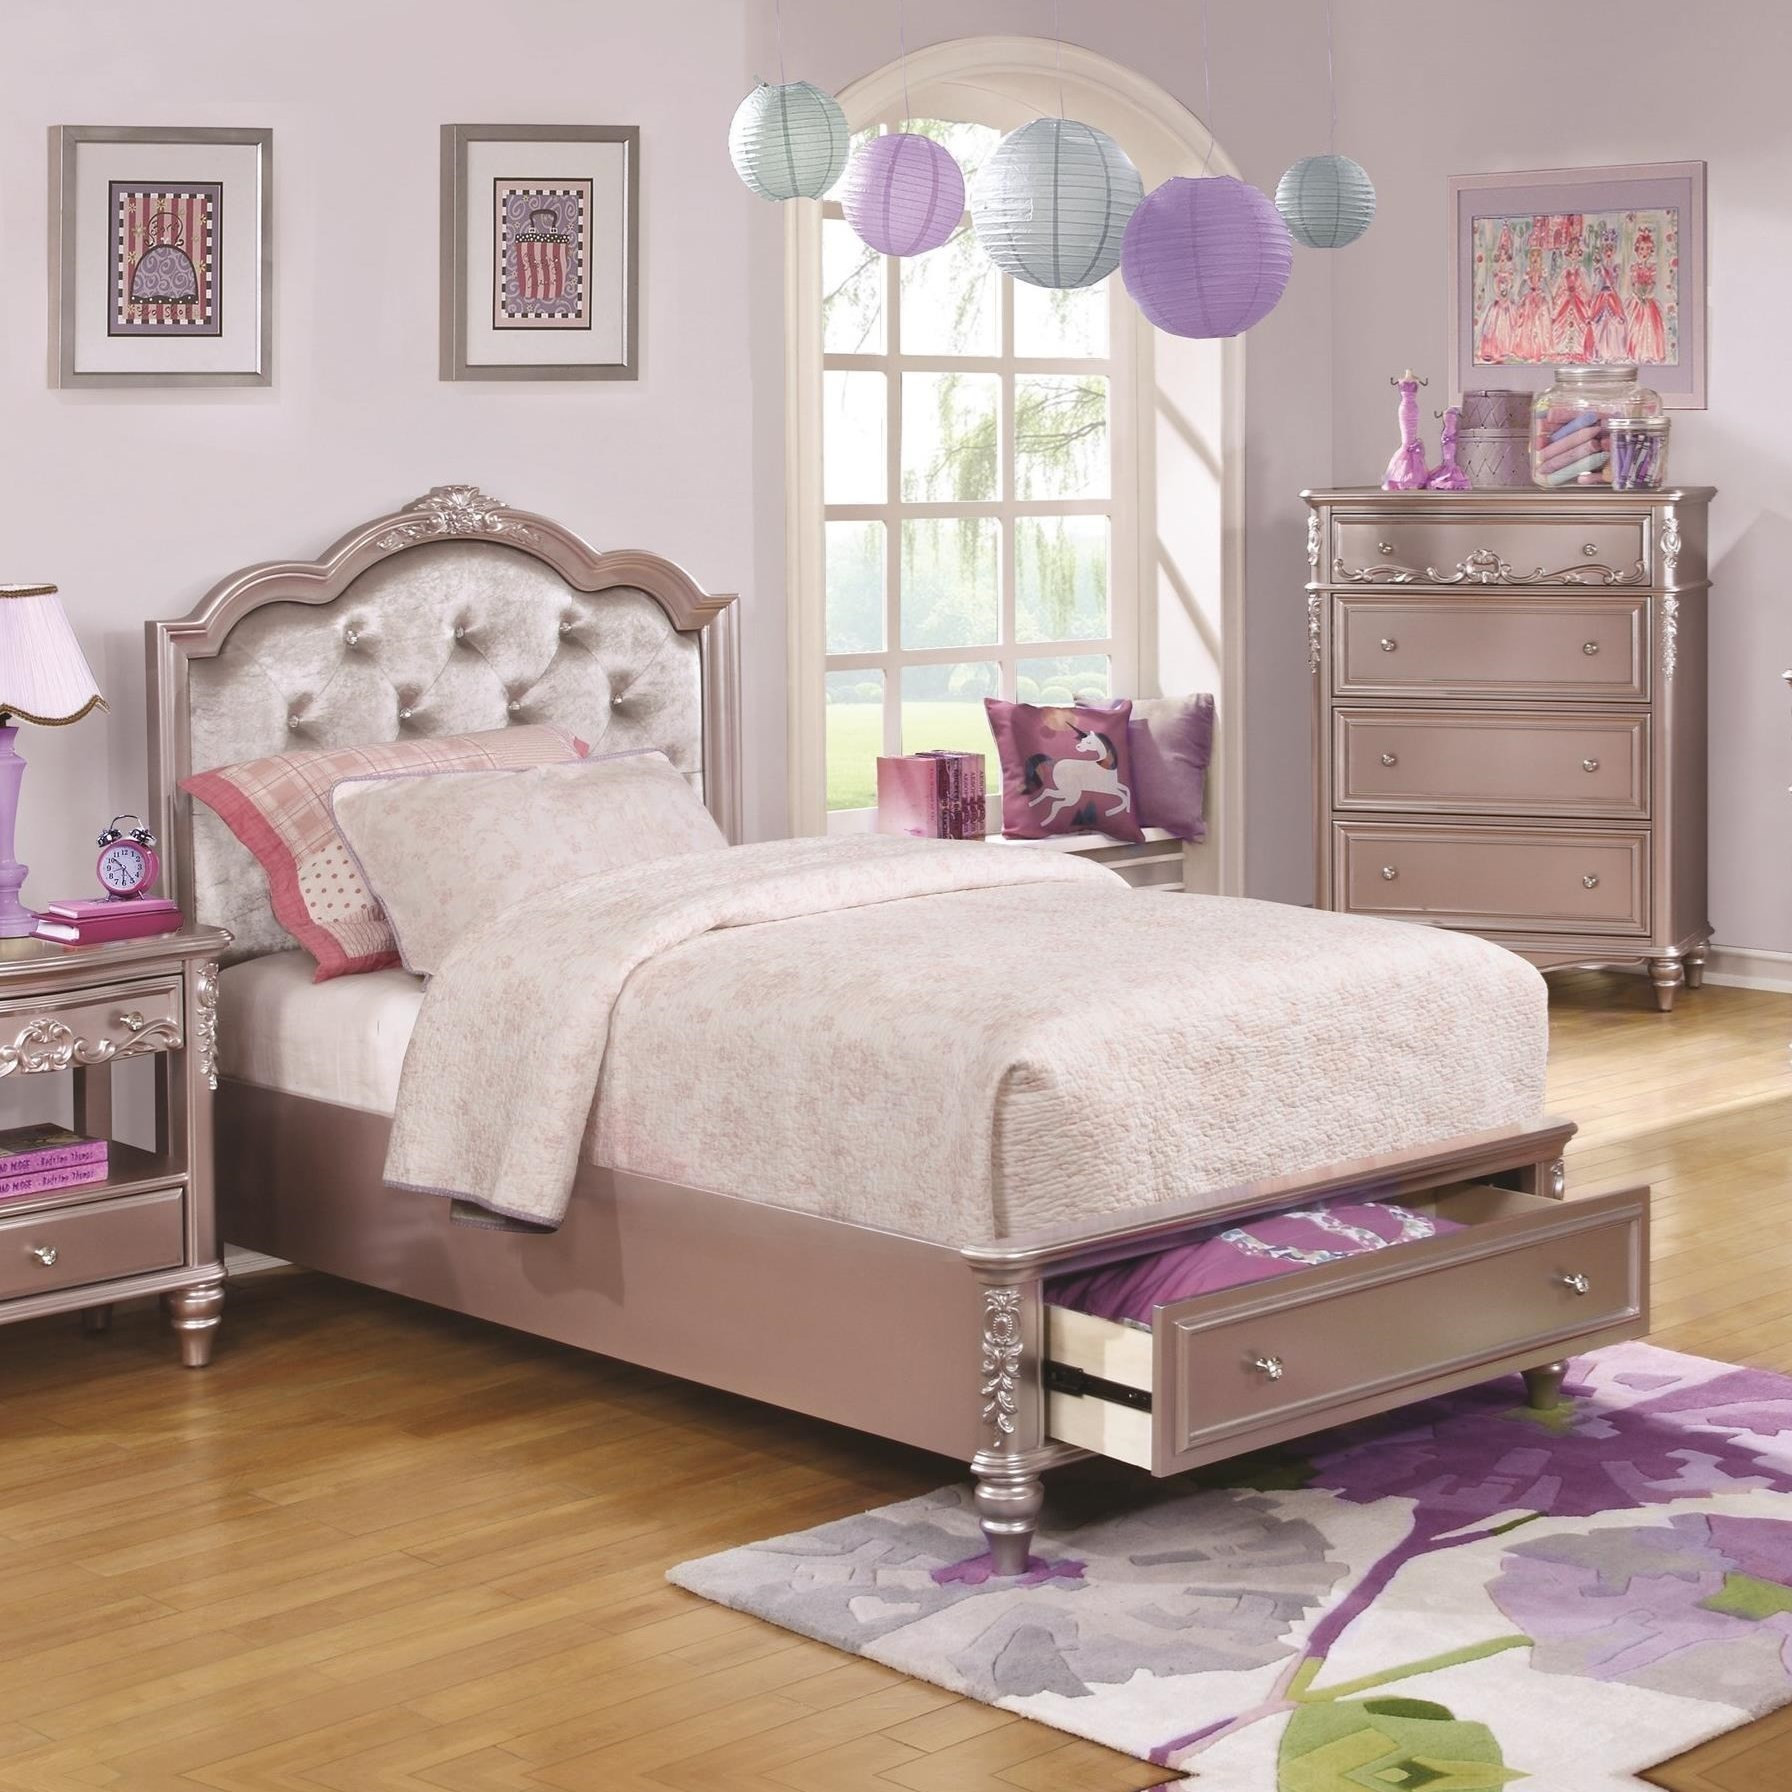 Full Size Storage Bedroom Sets
 Coaster Caroline Full Size Storage Bed with Diamond Tufted